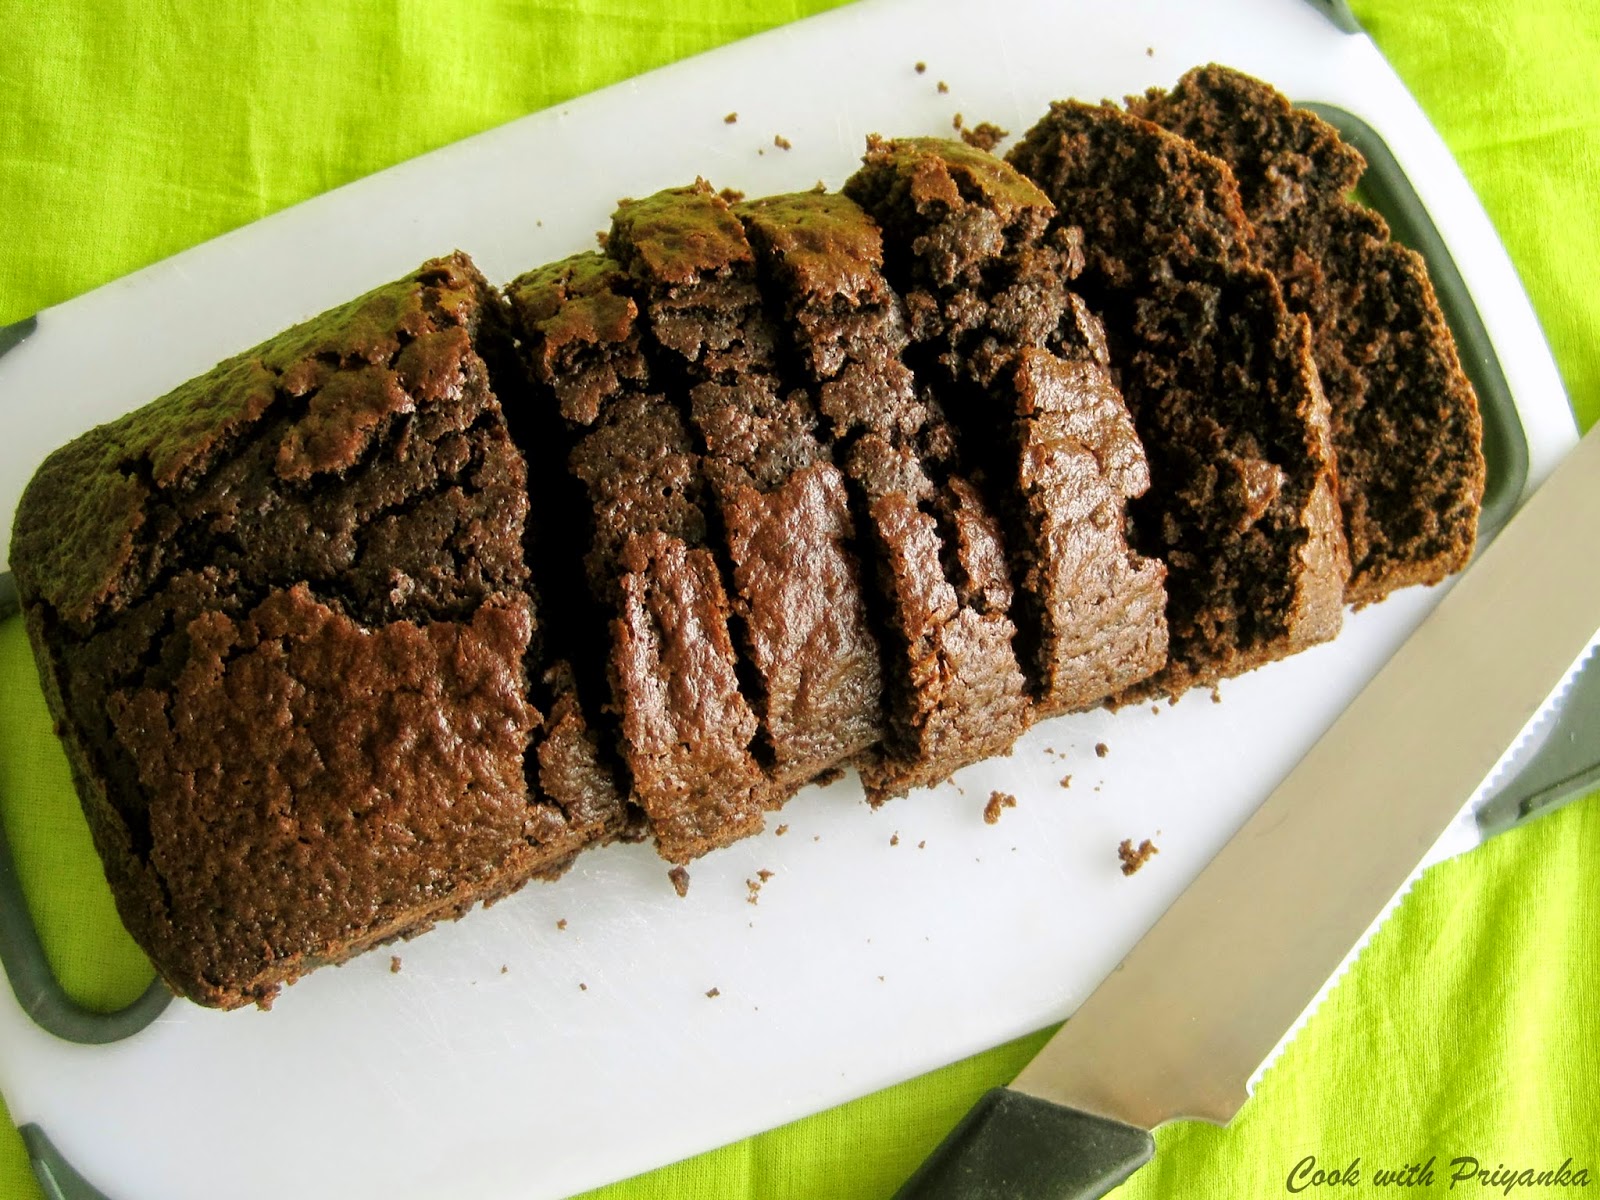 http://cookwithpriyankavarma.blogspot.co.uk/2014/04/chocolate-sponge-cake-eggless.html